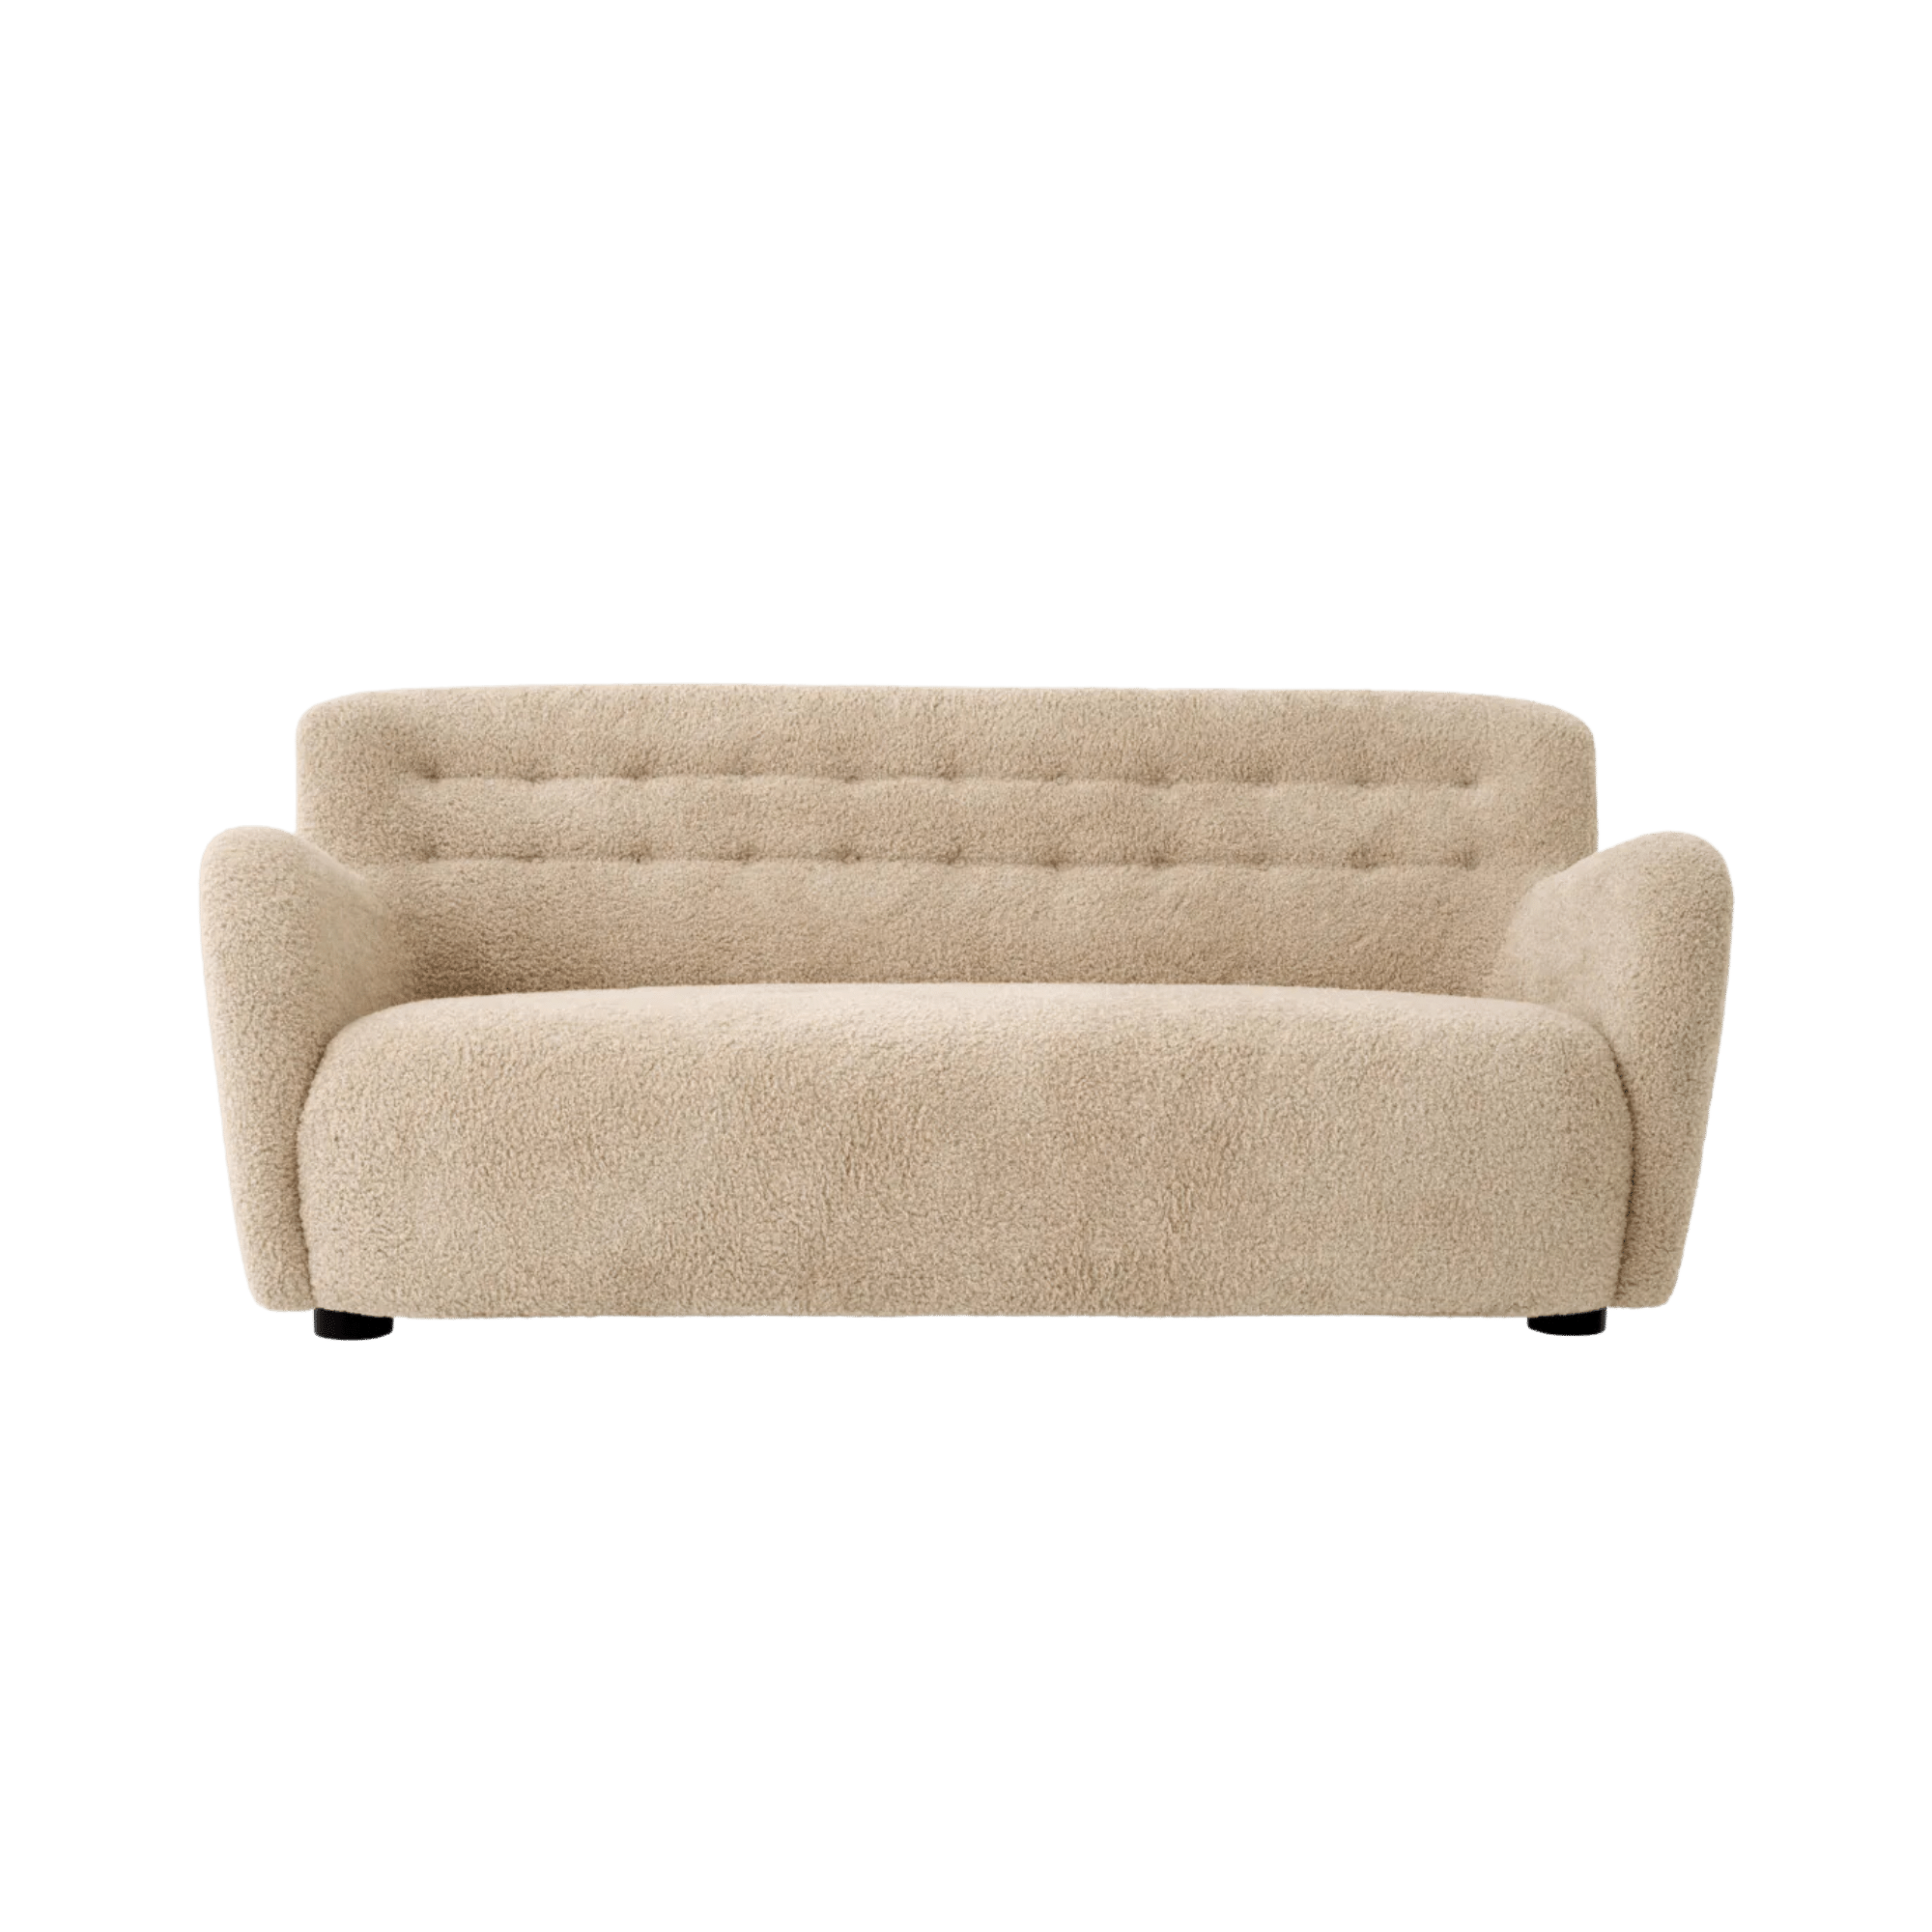 Bixby Sofa - THAT COOL LIVING